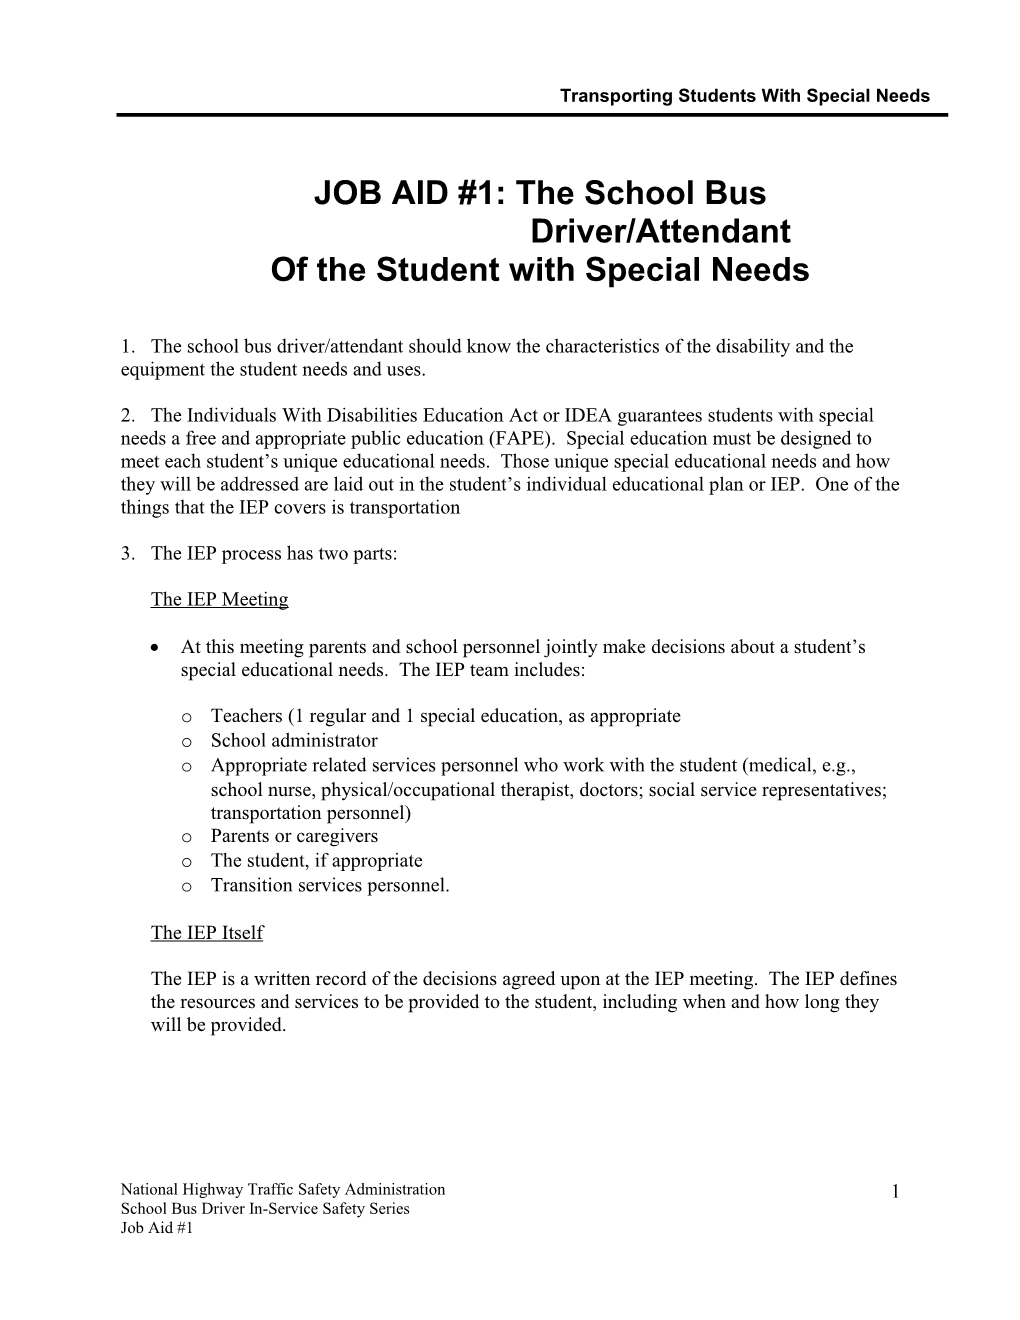 JOB AID #1: the School Bus Driver/Attendant